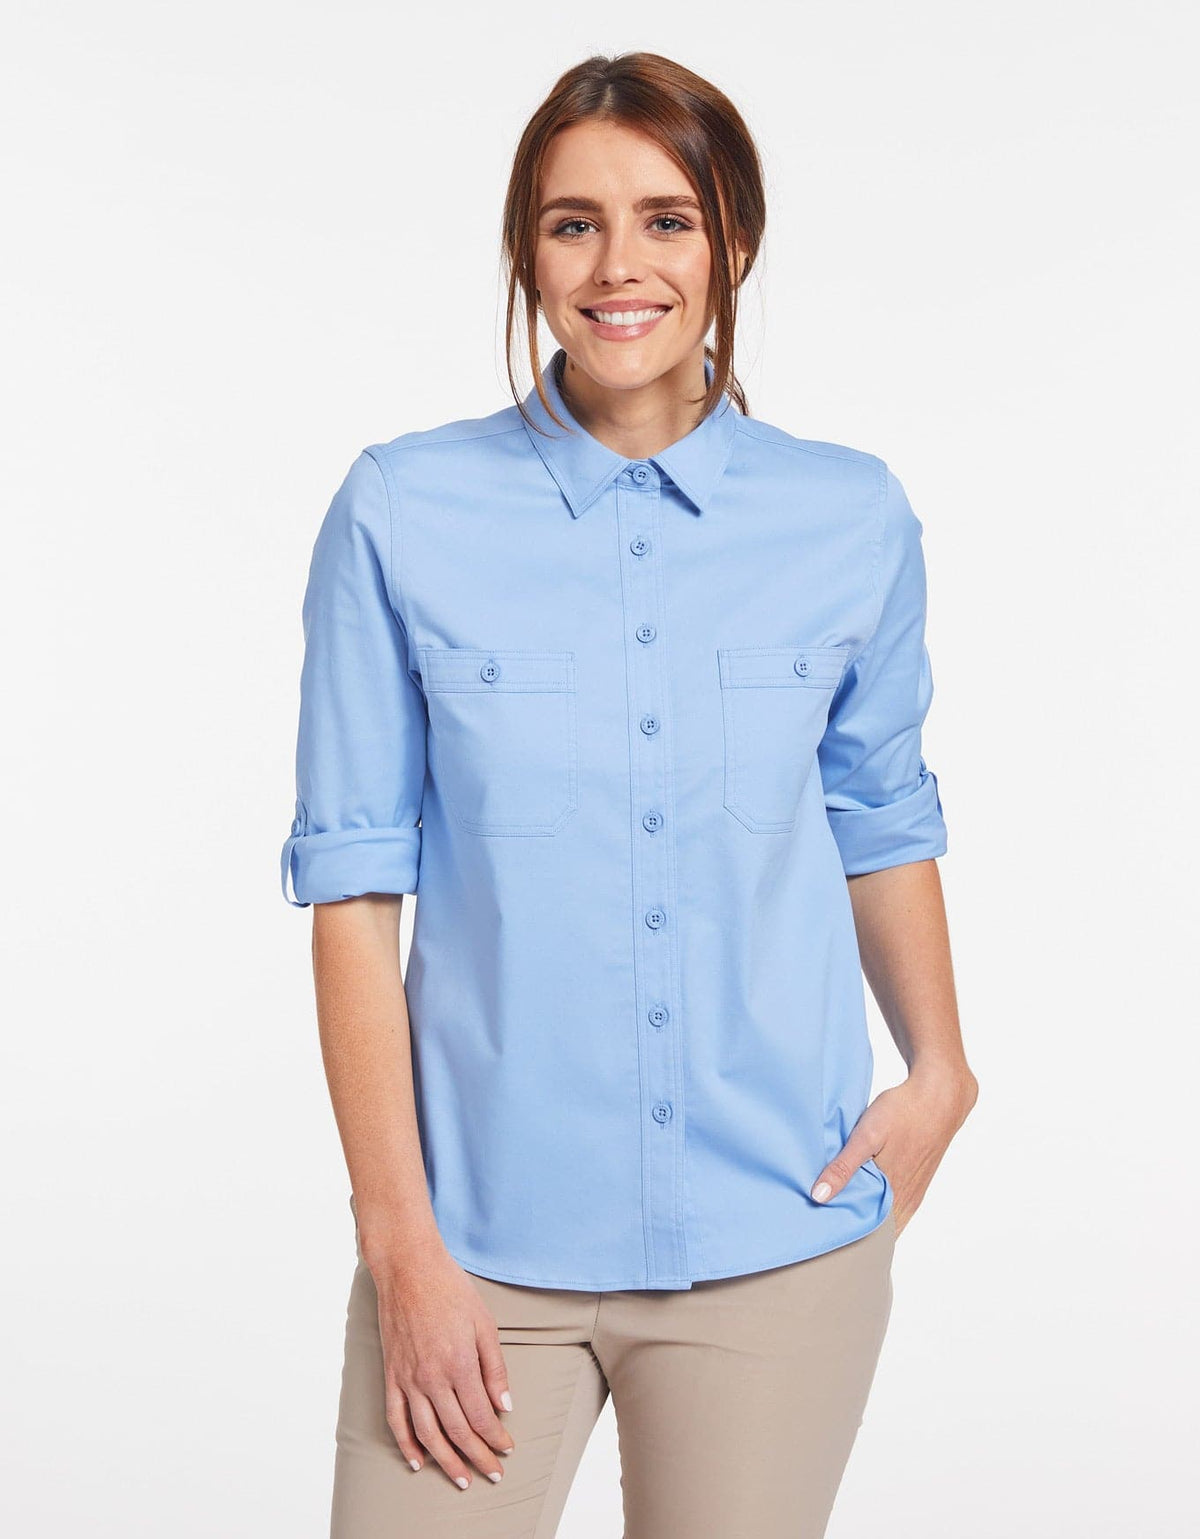 Outback Shirt UPF50+ Technicool for Sun Protection For Women - Solbari USA